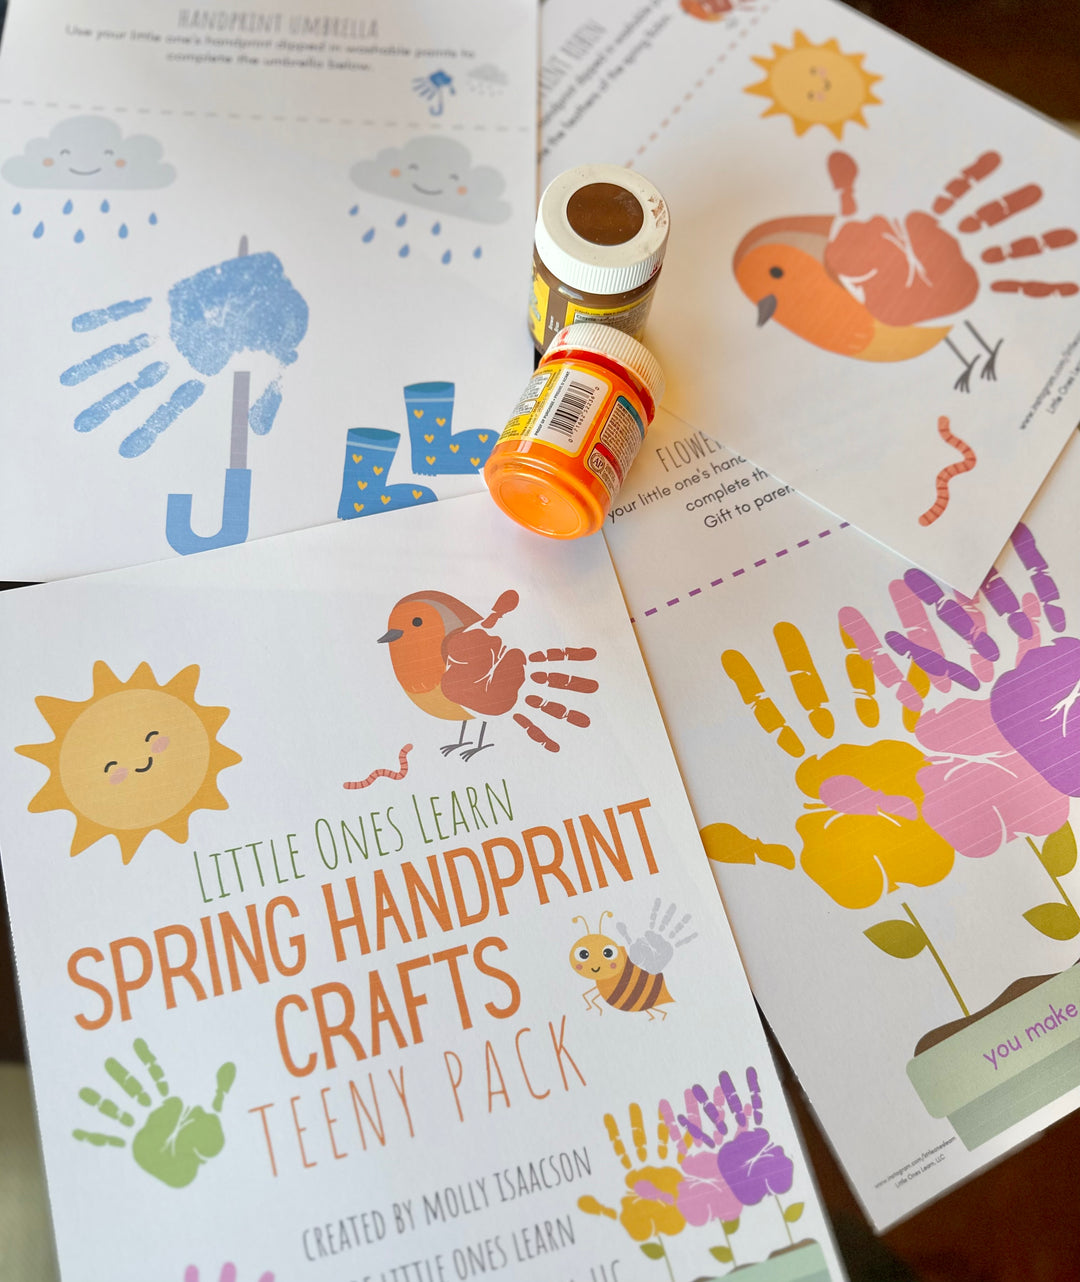 LOL Spring Handprint Crafts Teeny Pack